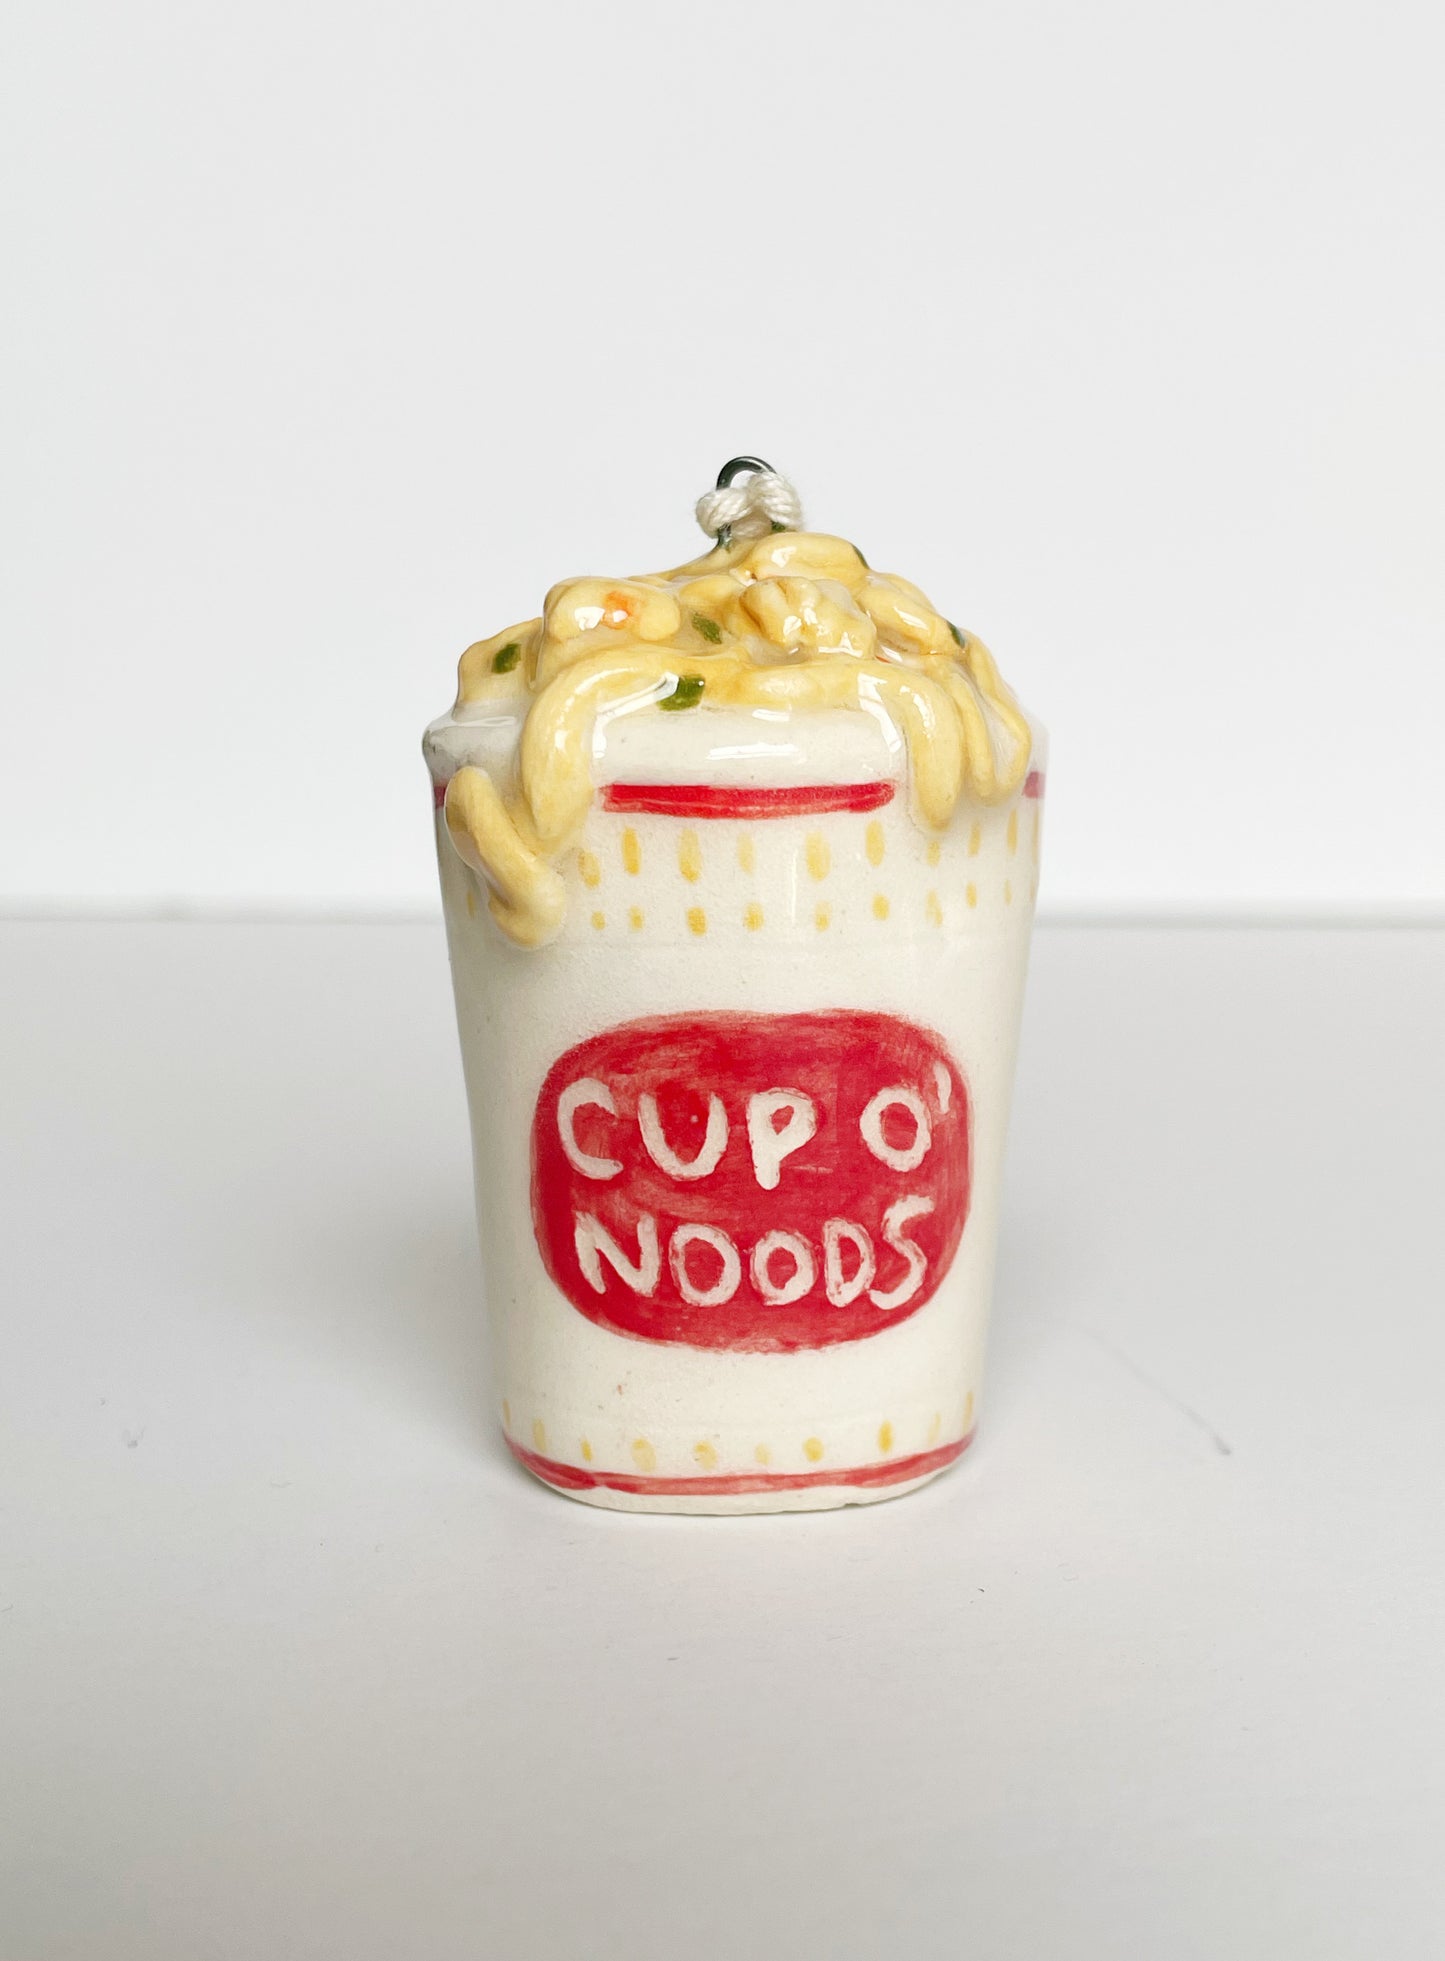 Ramen Noodle Cup O’ Noods Ceramic Ornament